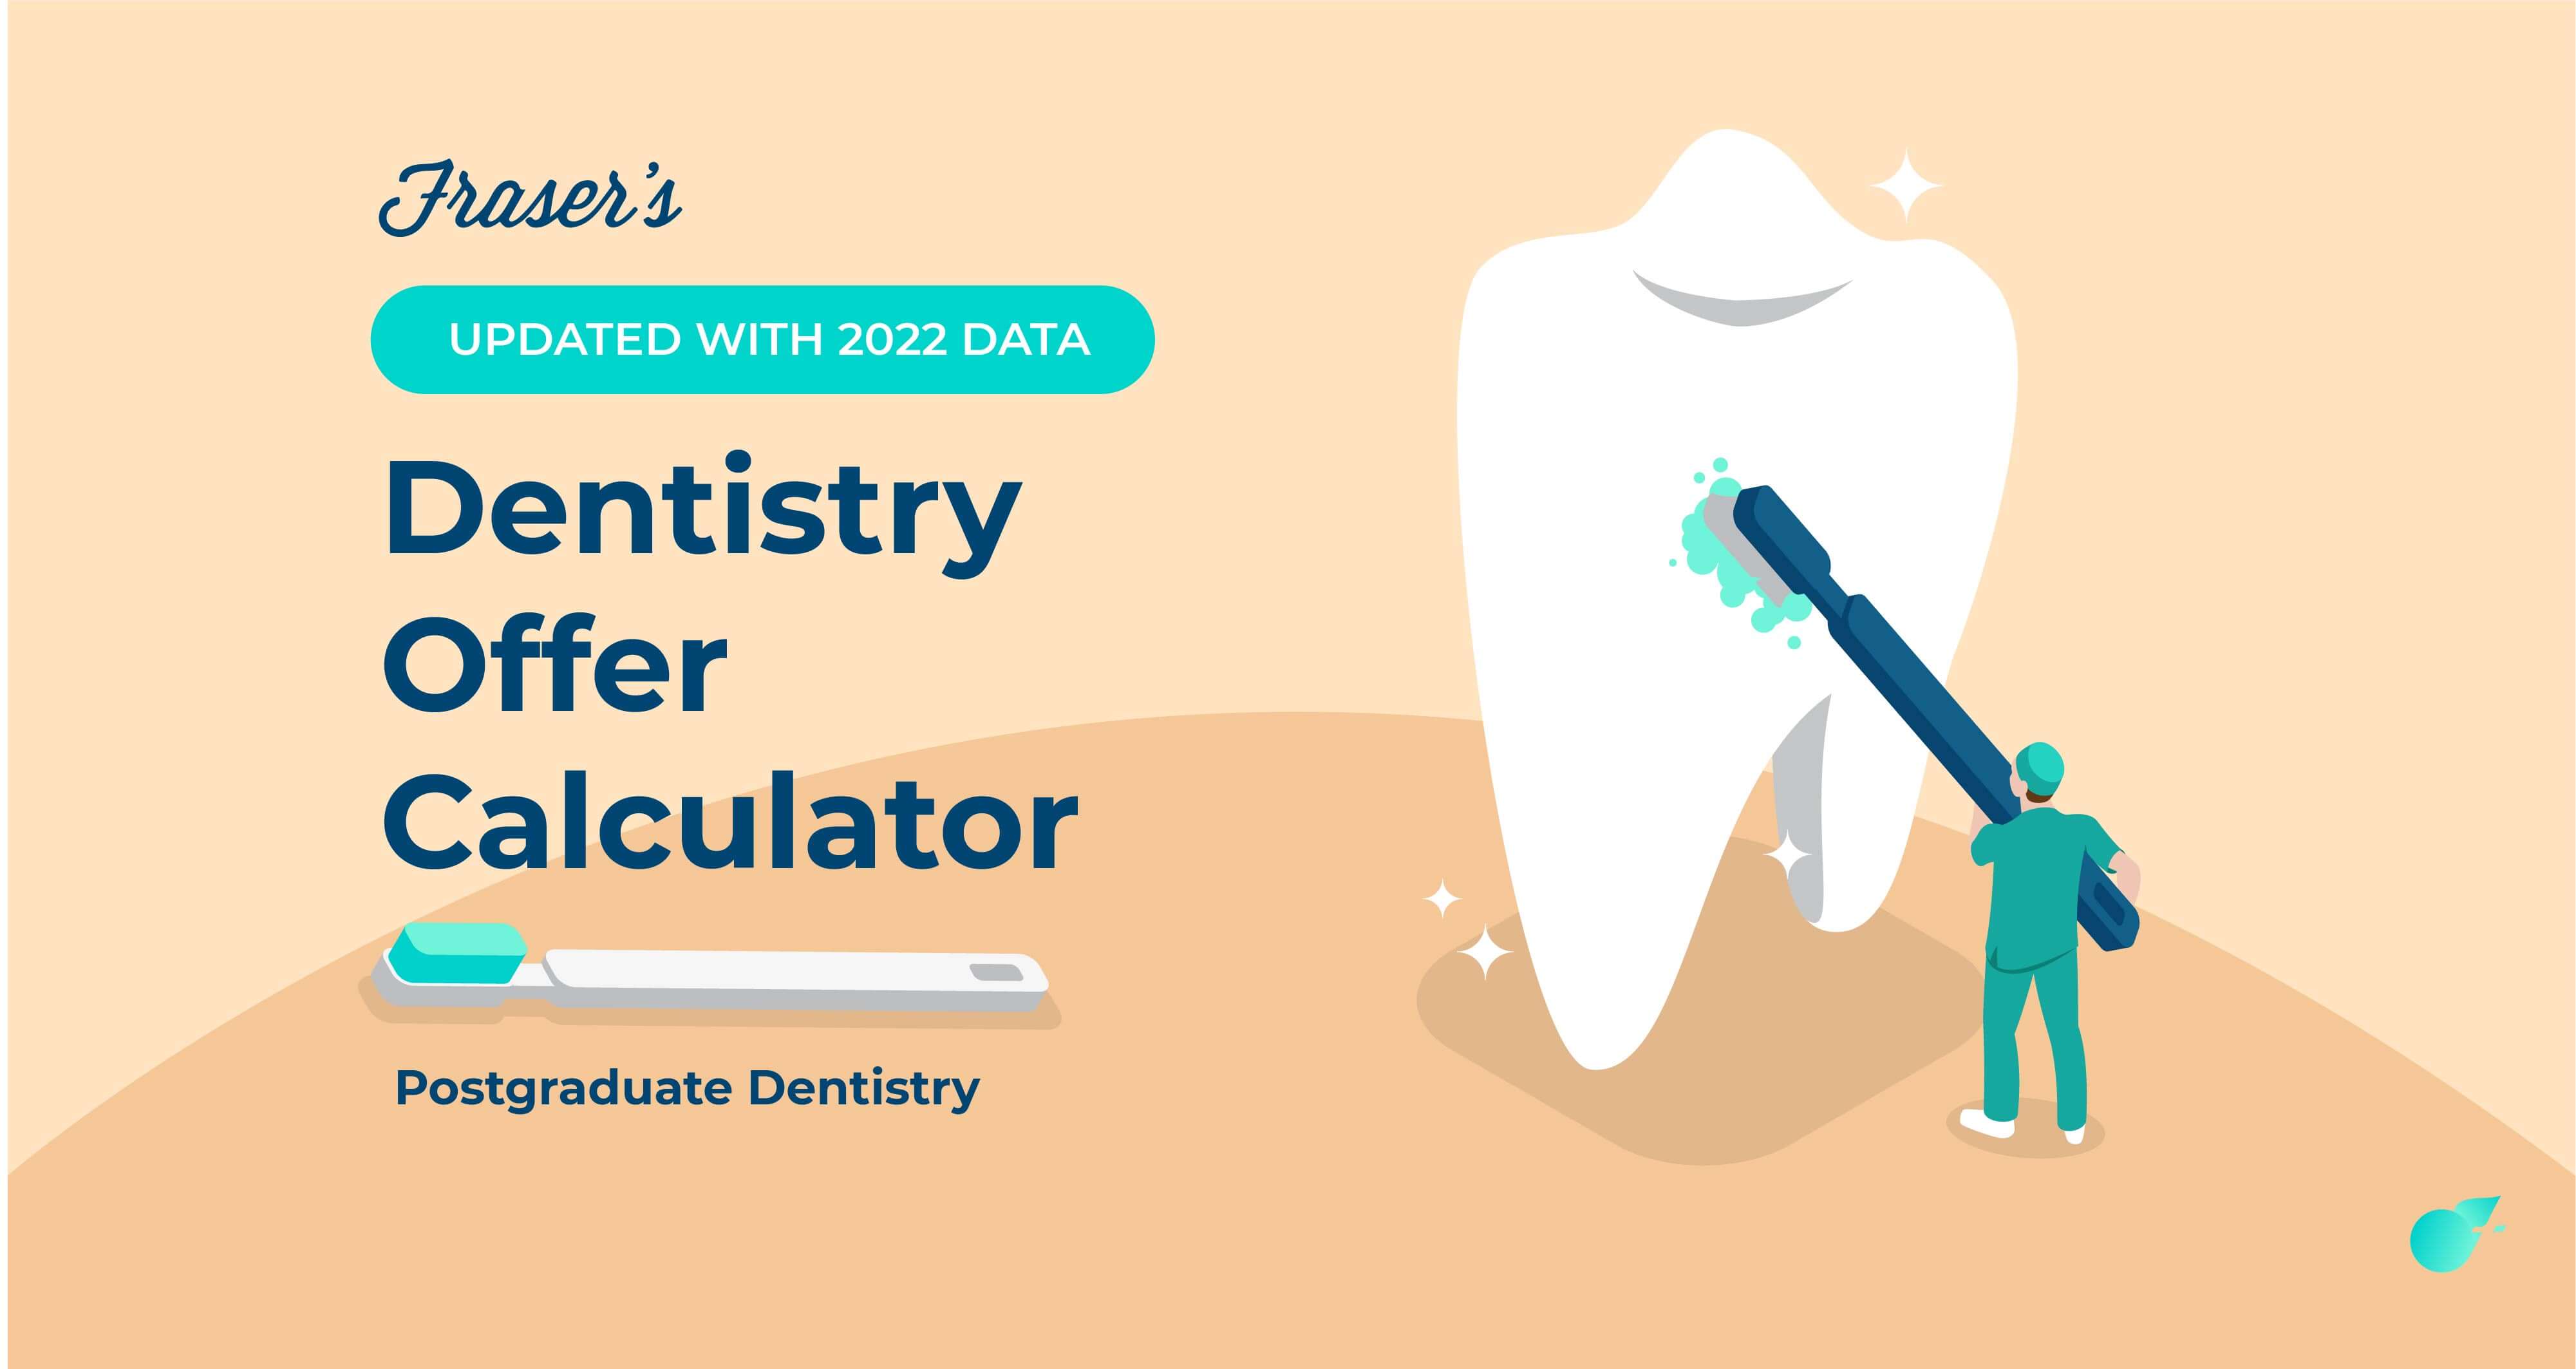 Gamsat dentistry offer calculator 2022 entry